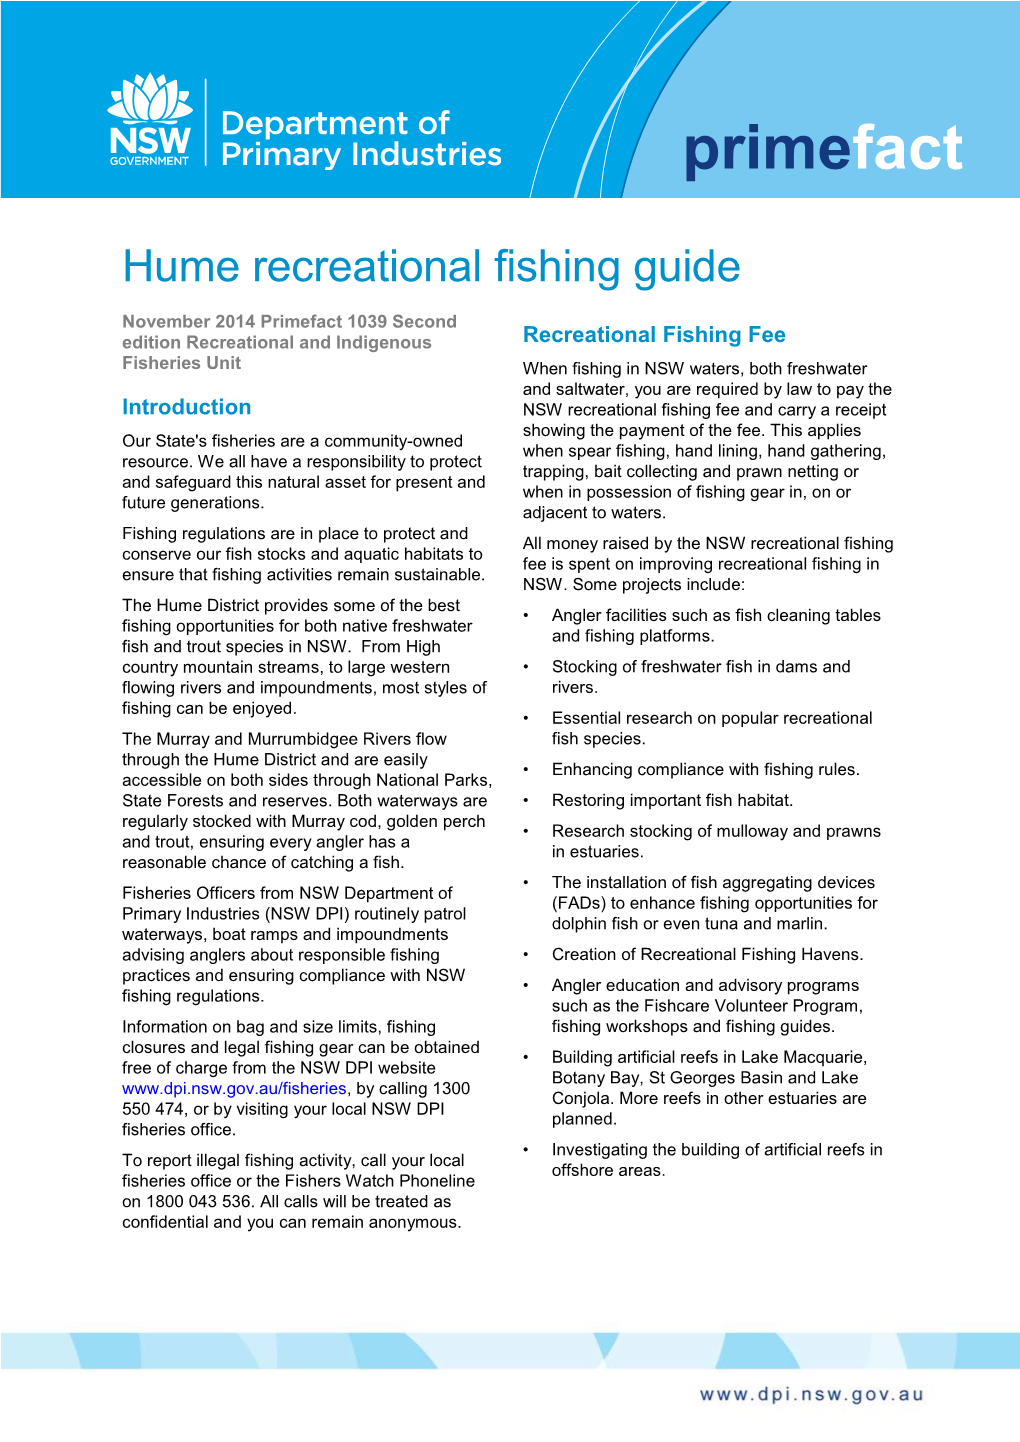 Hume Recreational Fishing Guide